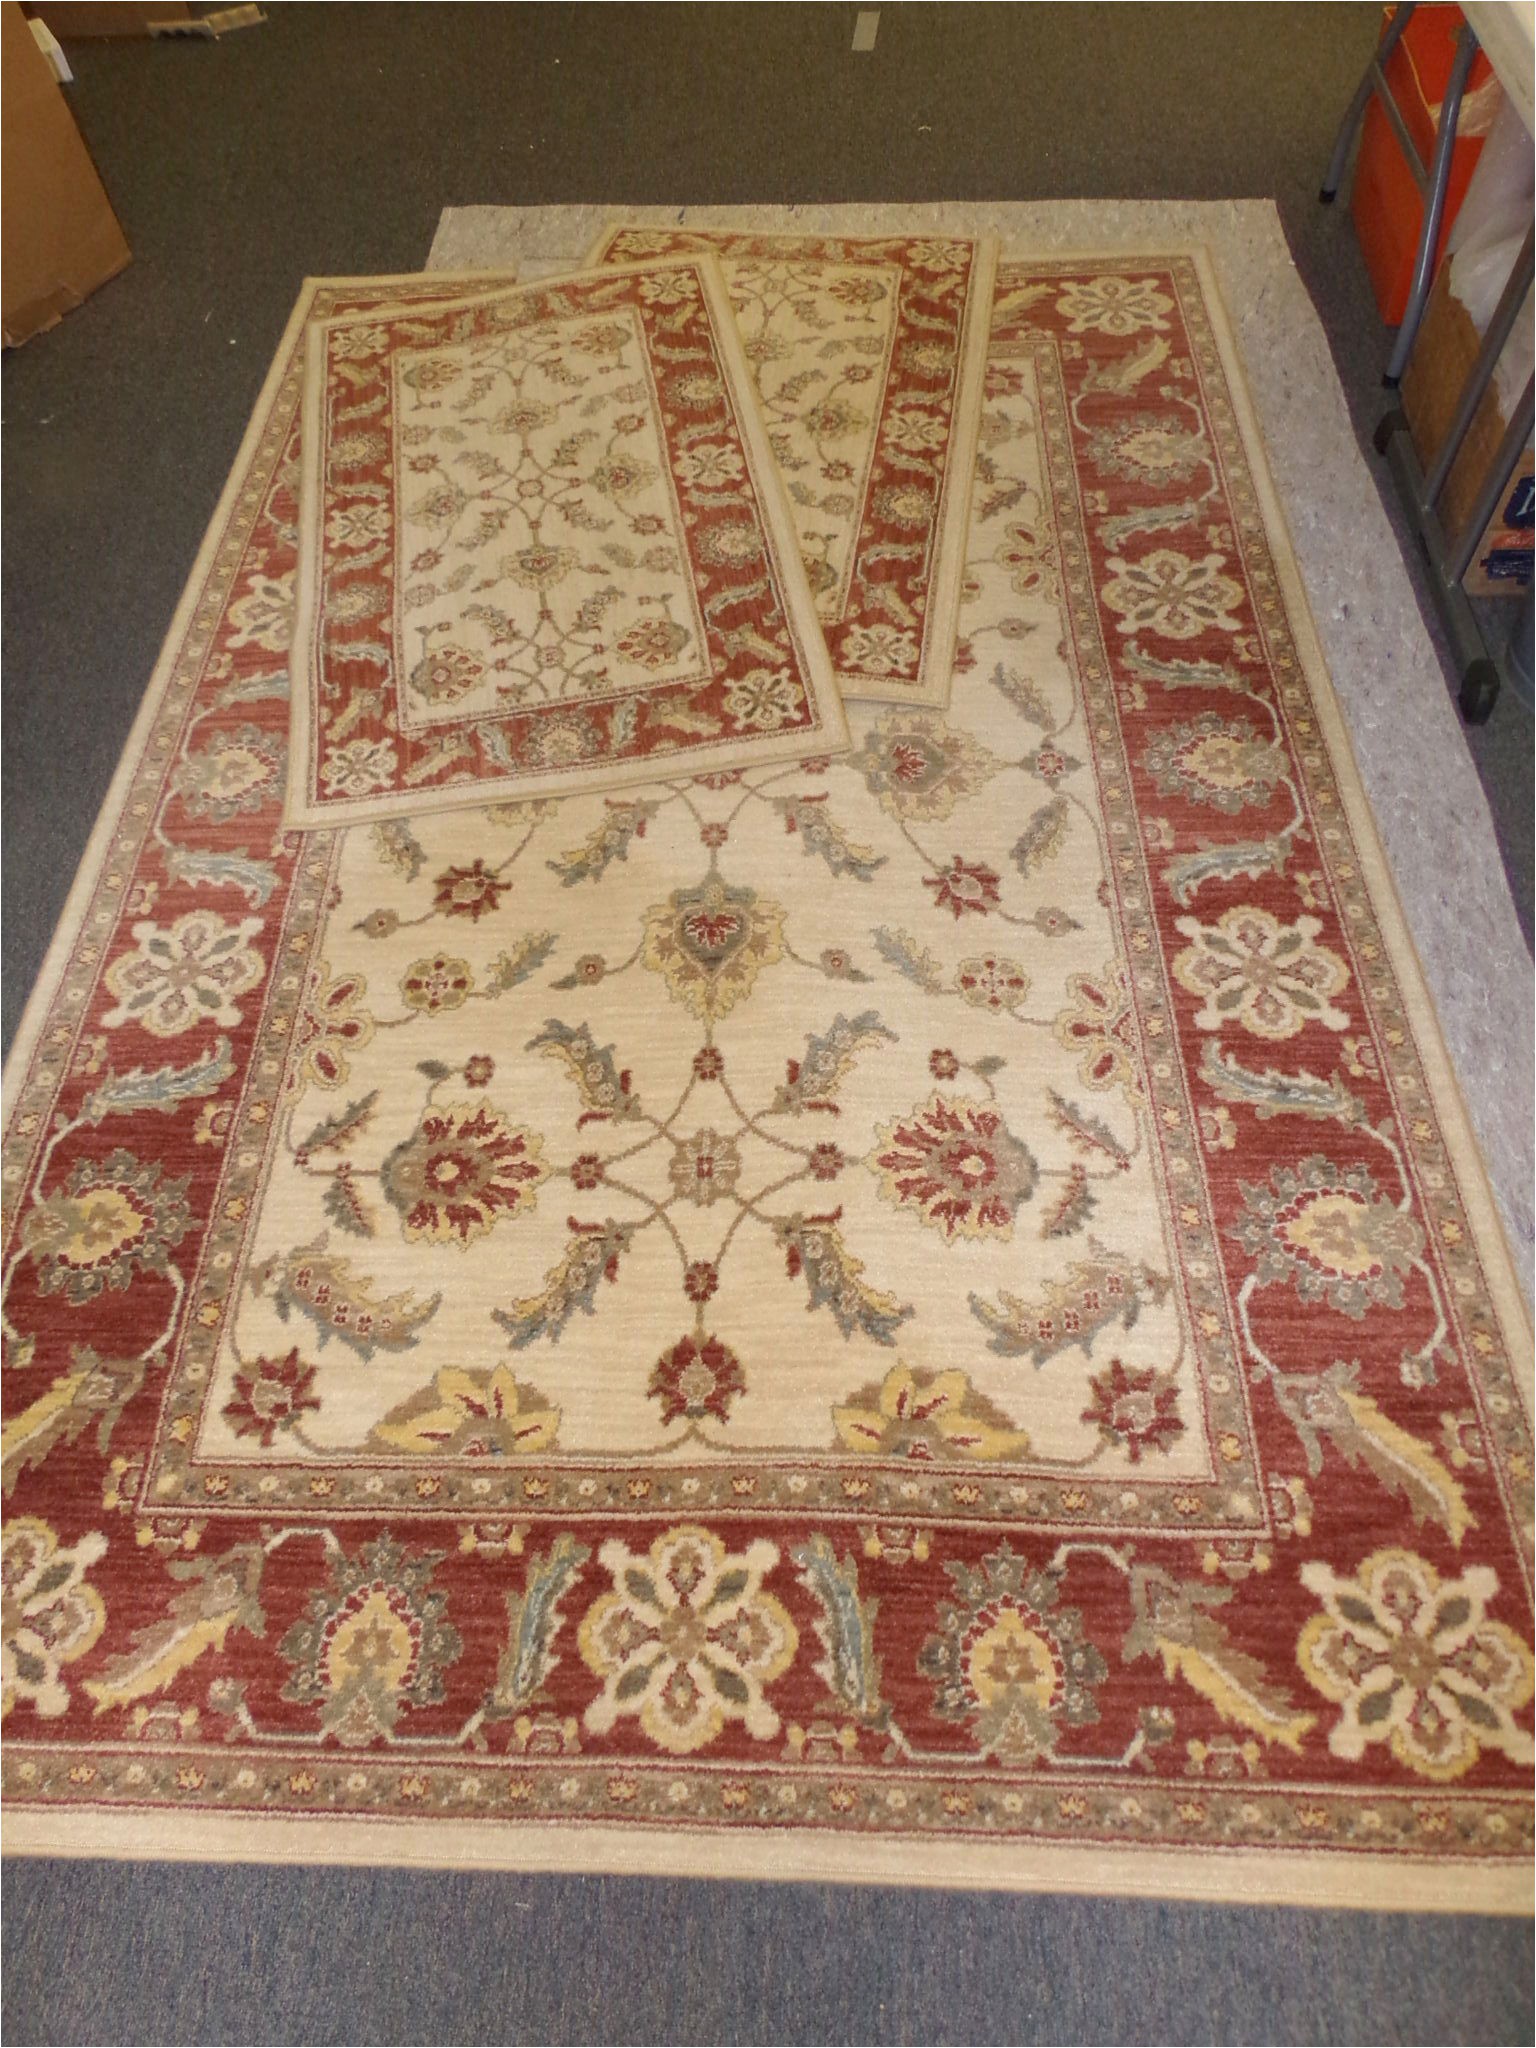 Carpet Padding for area Rugs Lowes 3pc Karastan New Zealand Wool oriental area Rug Sedona Ivory